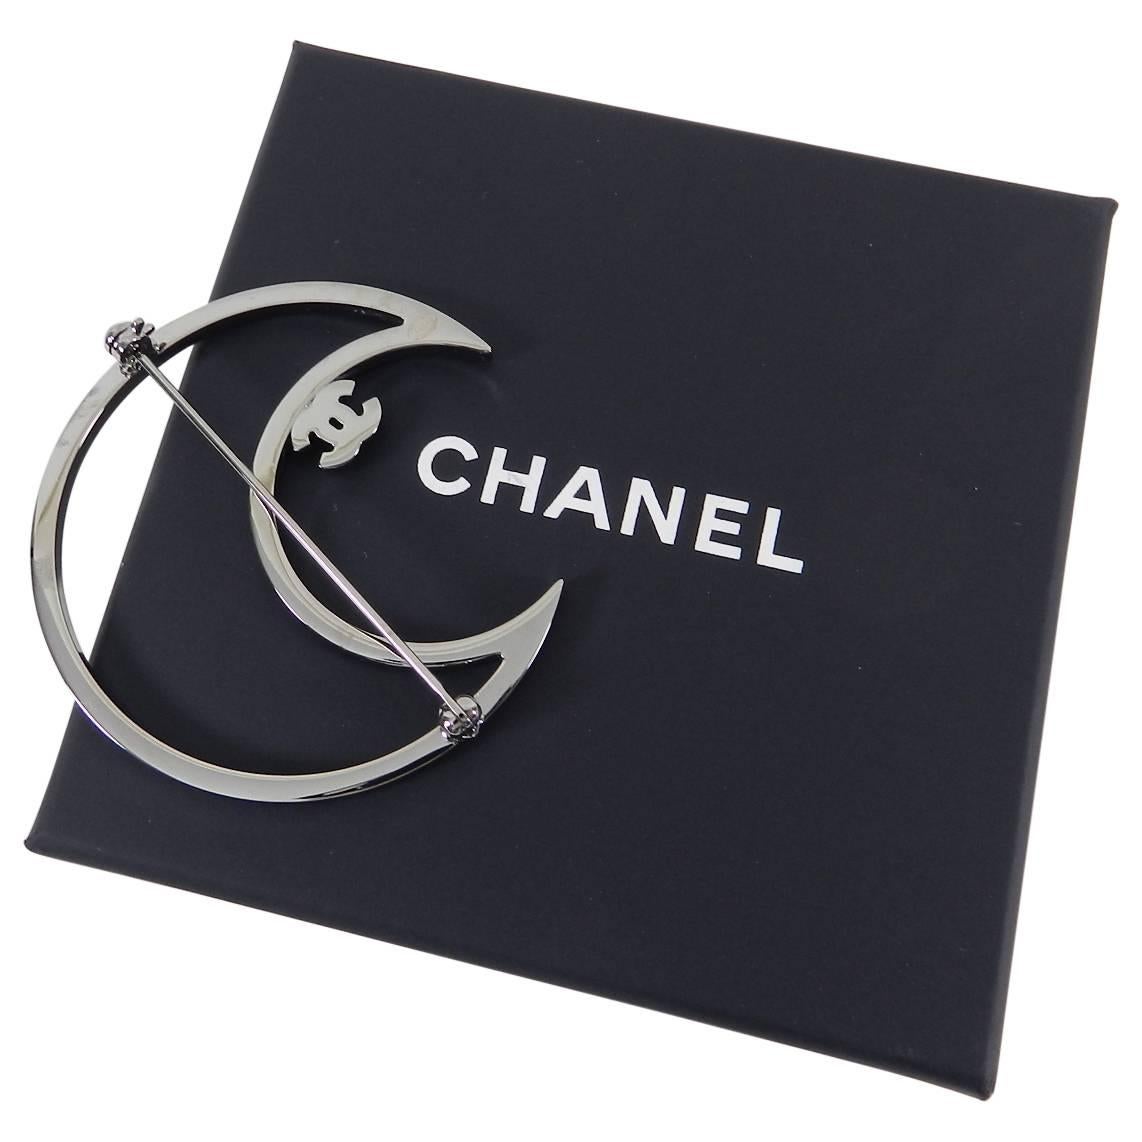 Chanel 2017 Cruise Blue Rhinestone Ruthenium Crystal CC Moon Brooch.  Light blue rhinestones with CC logo and moon design.  Brand new unworn in box. 2-1/8” x 2-1/8”
